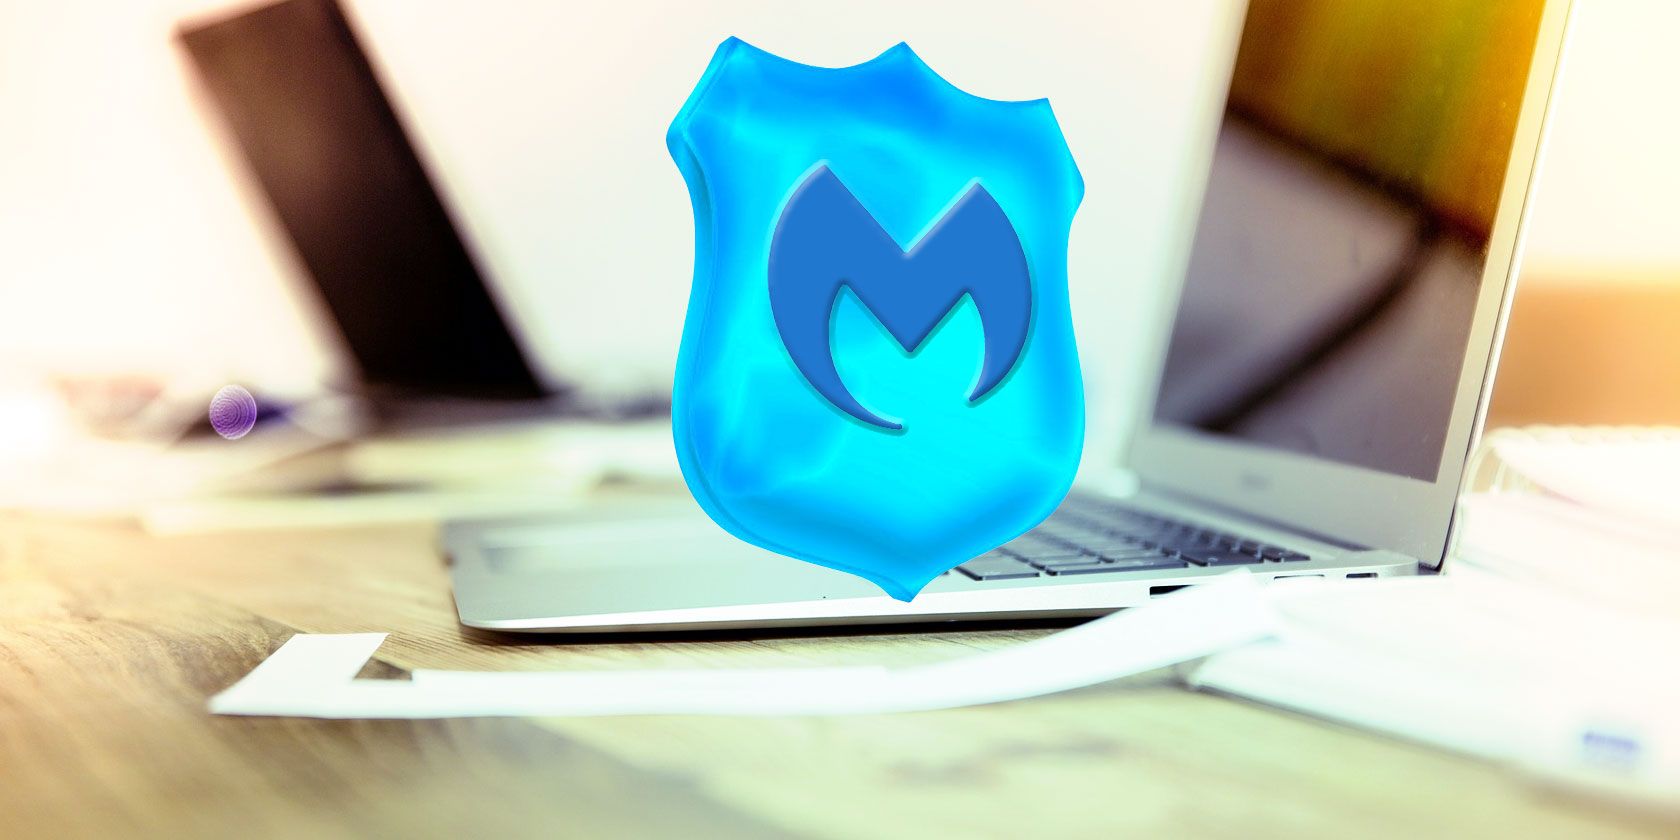 Malwarebytes logo on a blue shield, showing over a laptop